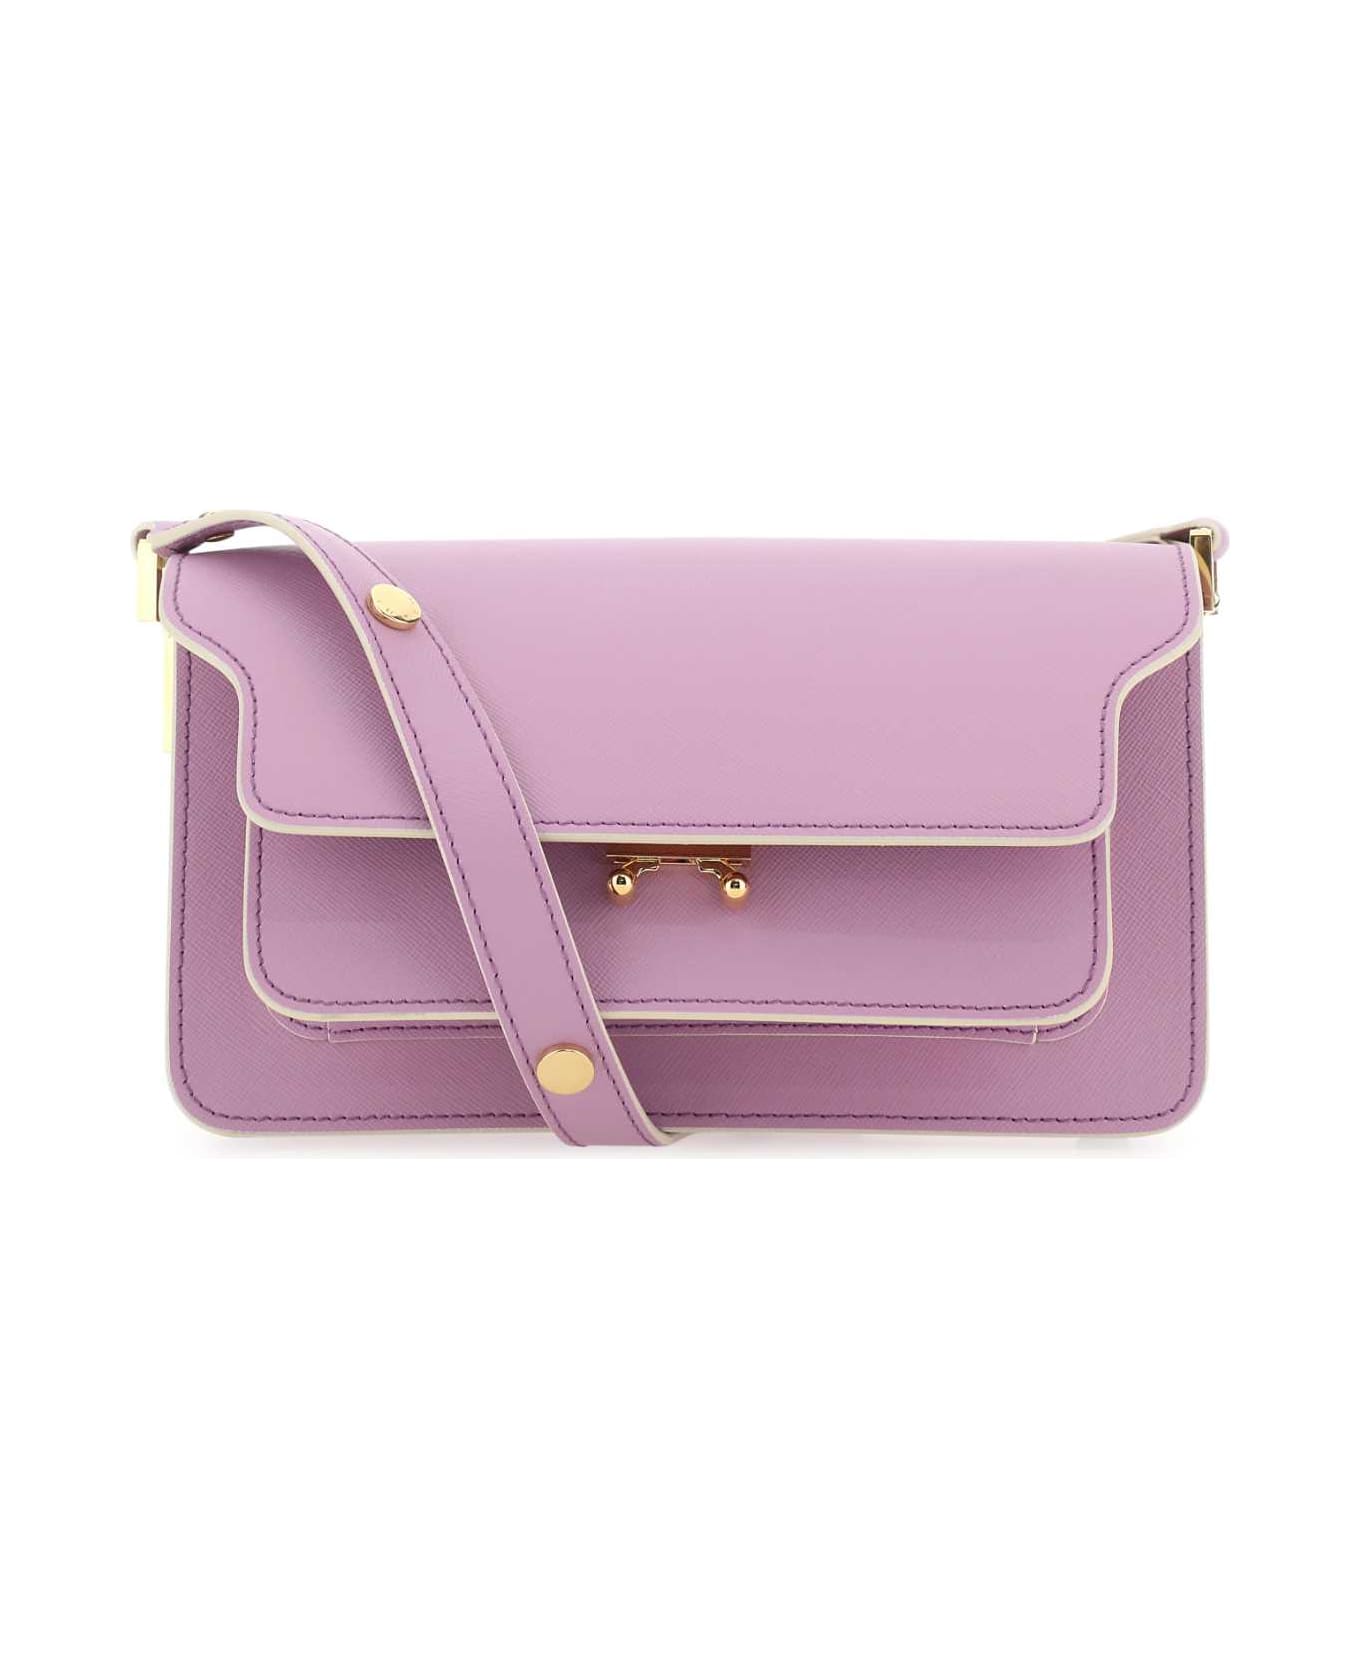 Marni Lilac Leather Mini Trunk Soft Shoulder Bag - LIGHTLILA